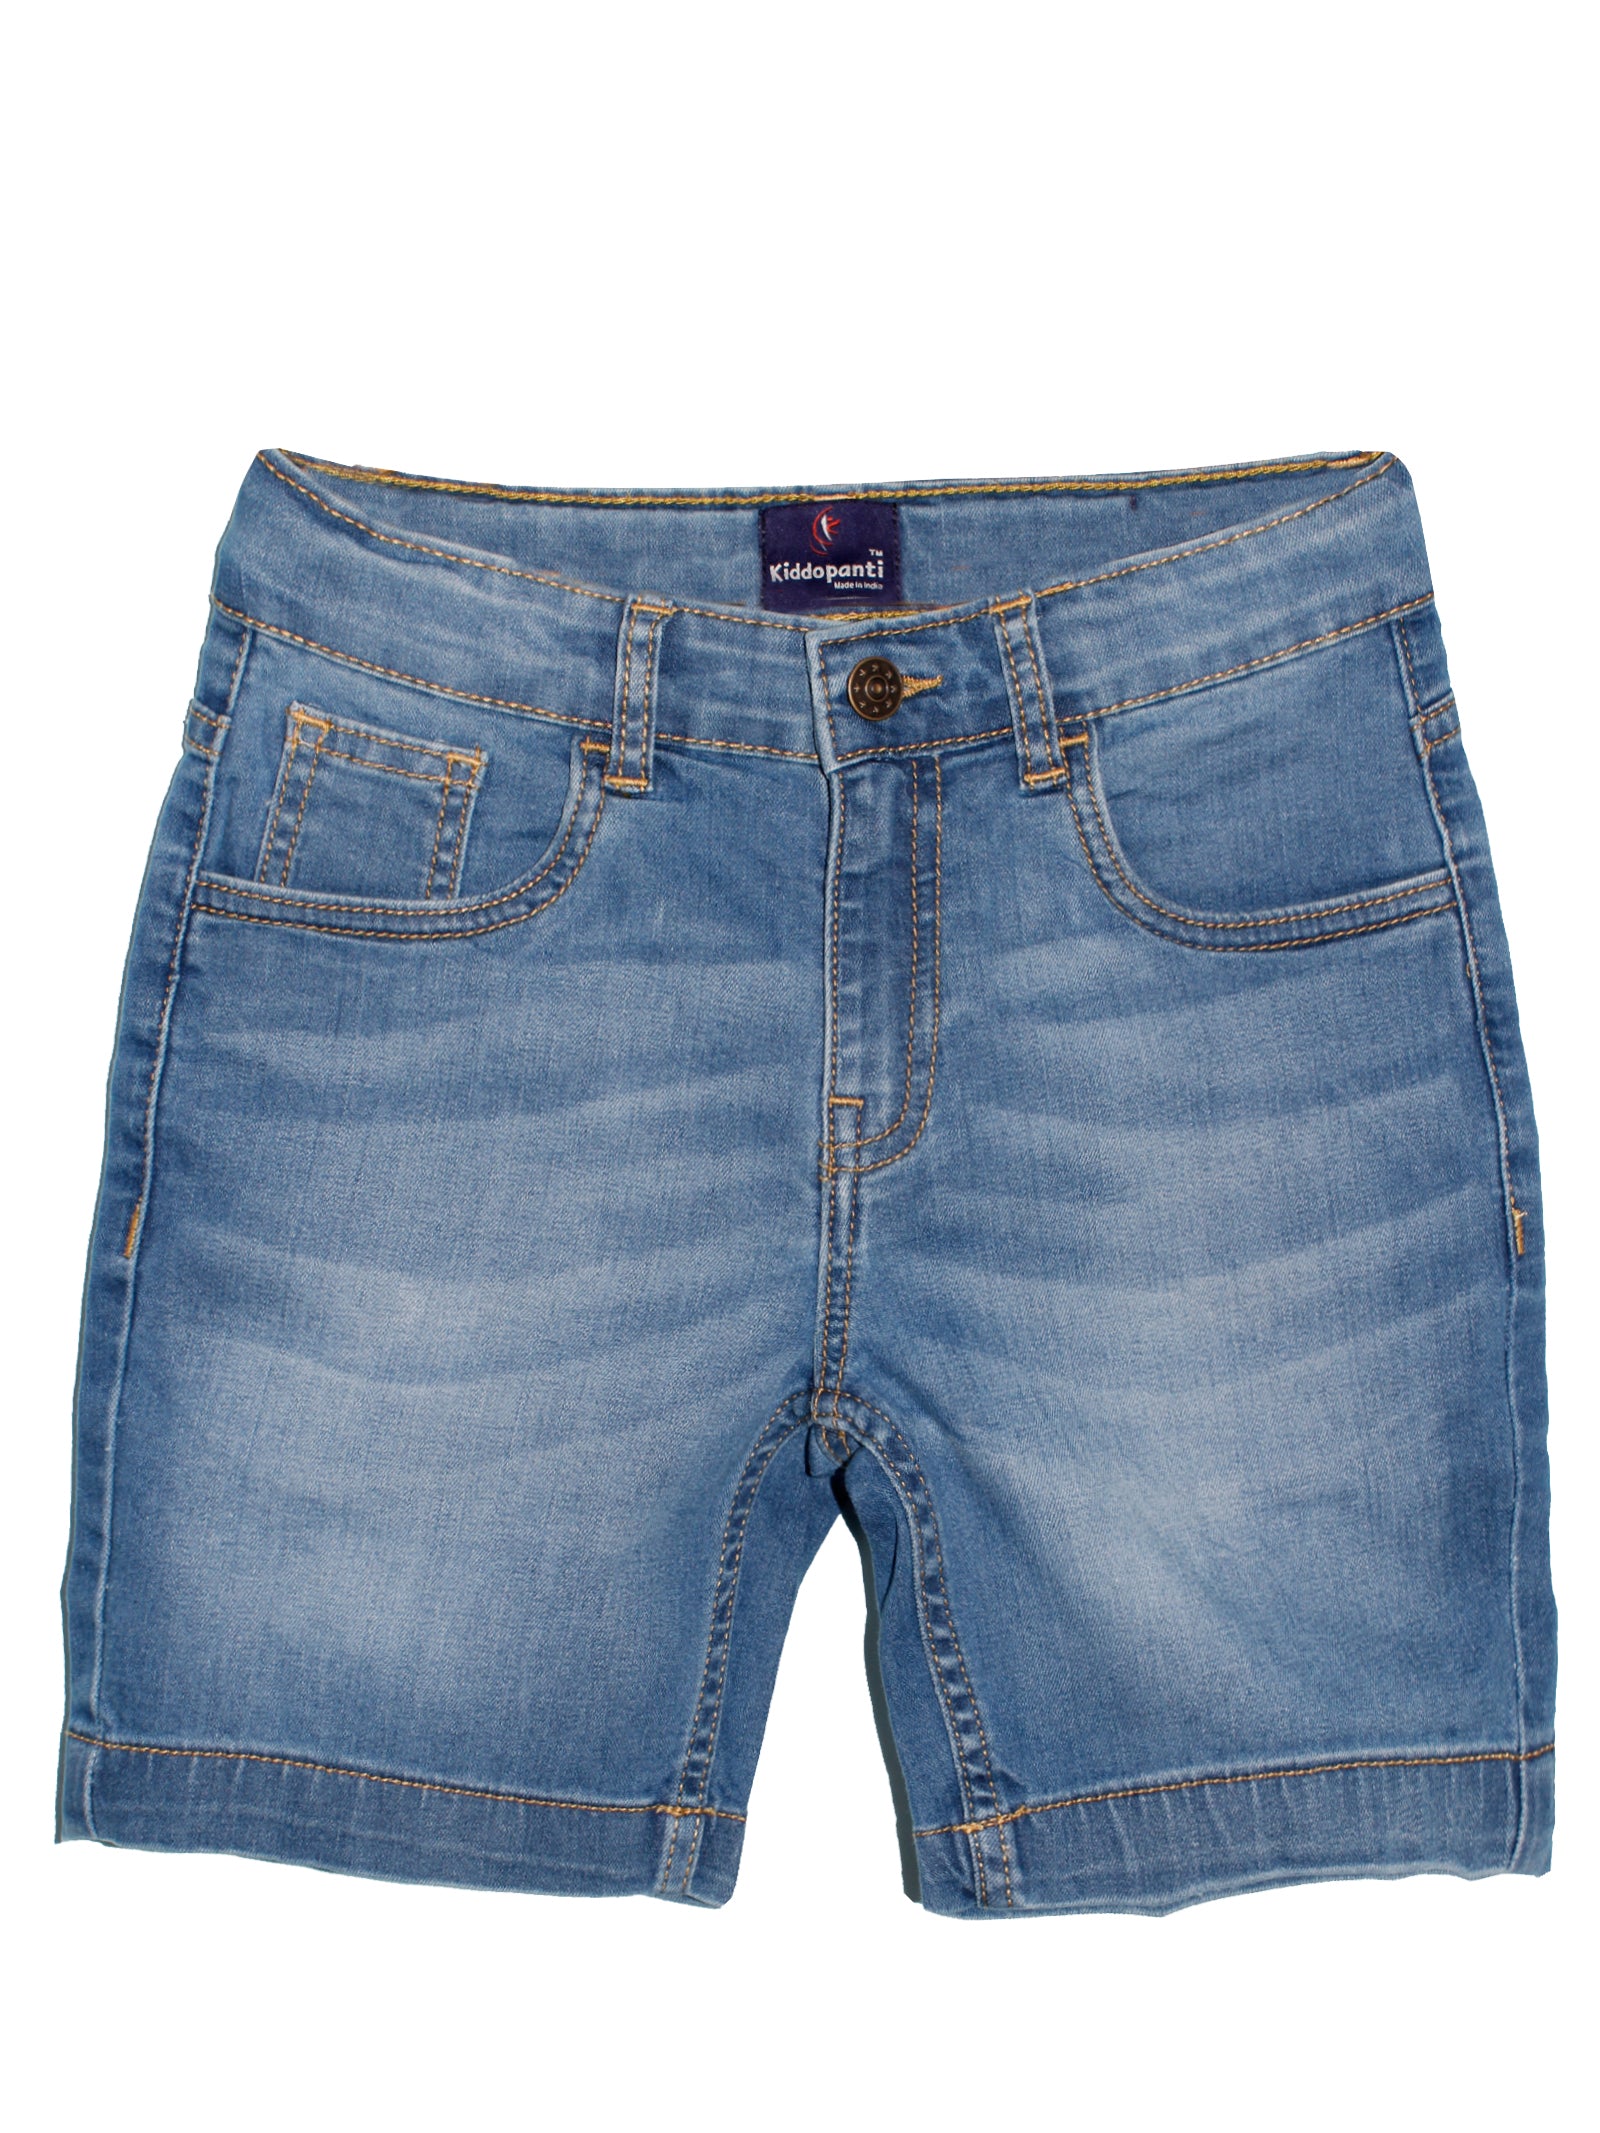 Buy KiddoPanti Boys Knee Length Denim Shorts, Mid Wash with Damage, 3-4Y at  Amazon.in